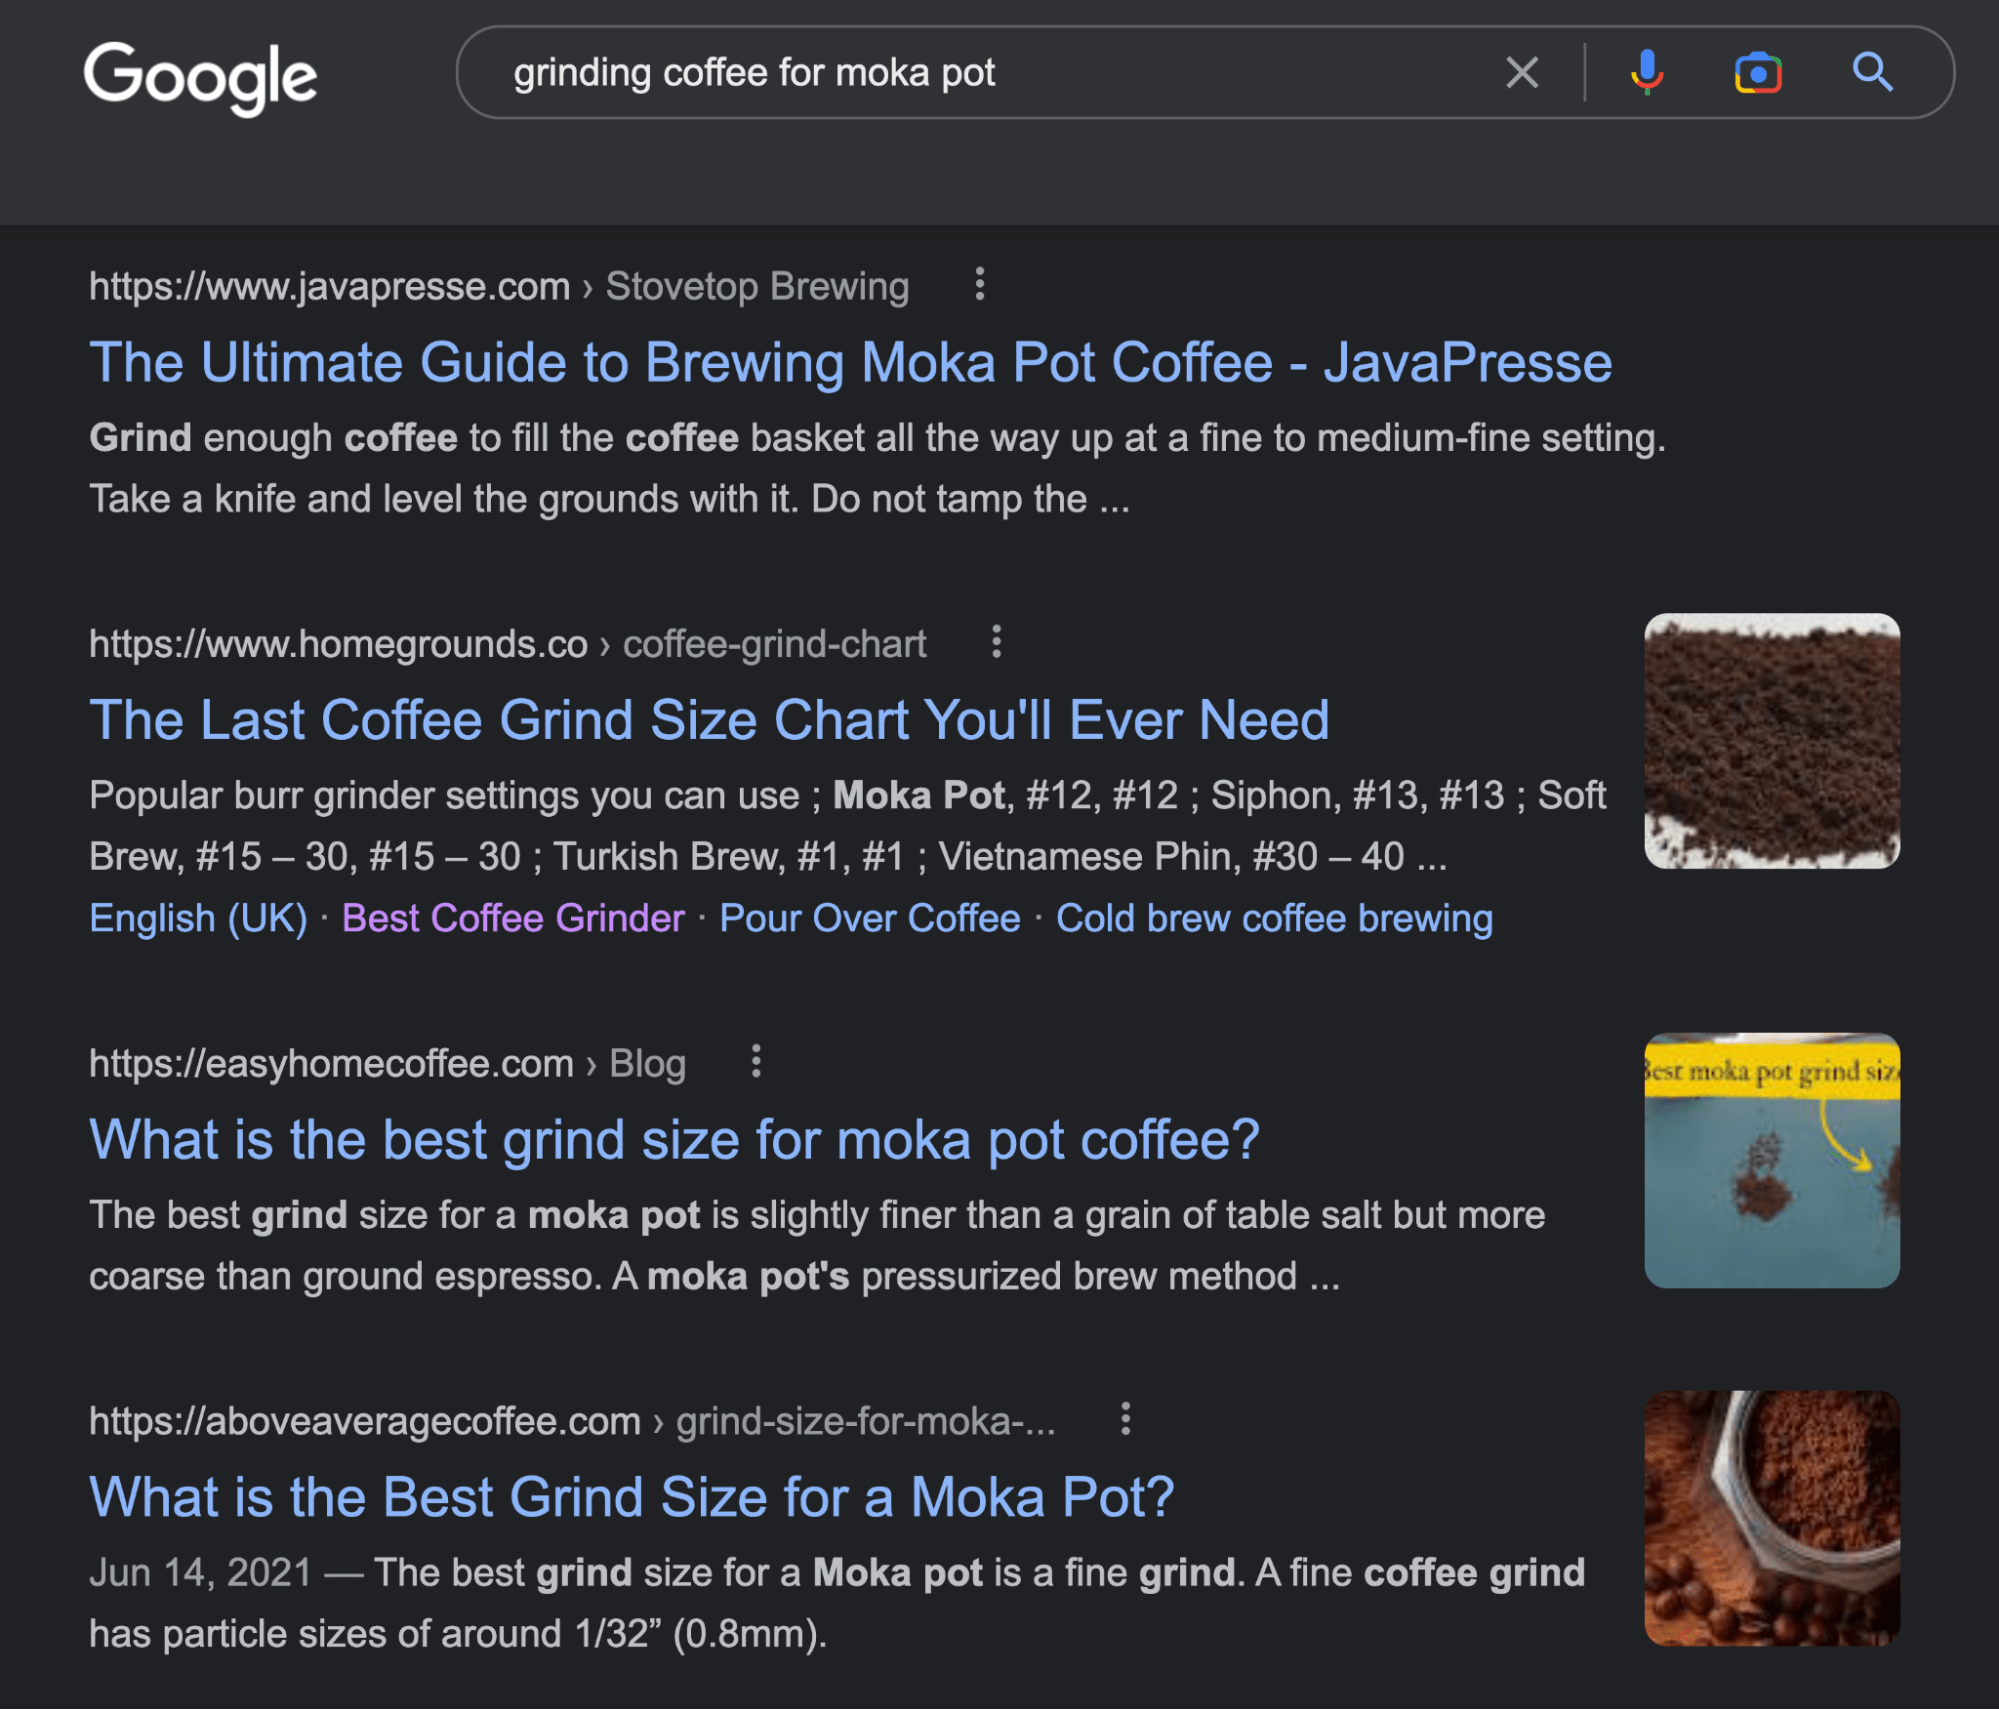 谷歌对 "grinding coffee for moka pot" 搜索的 SERP